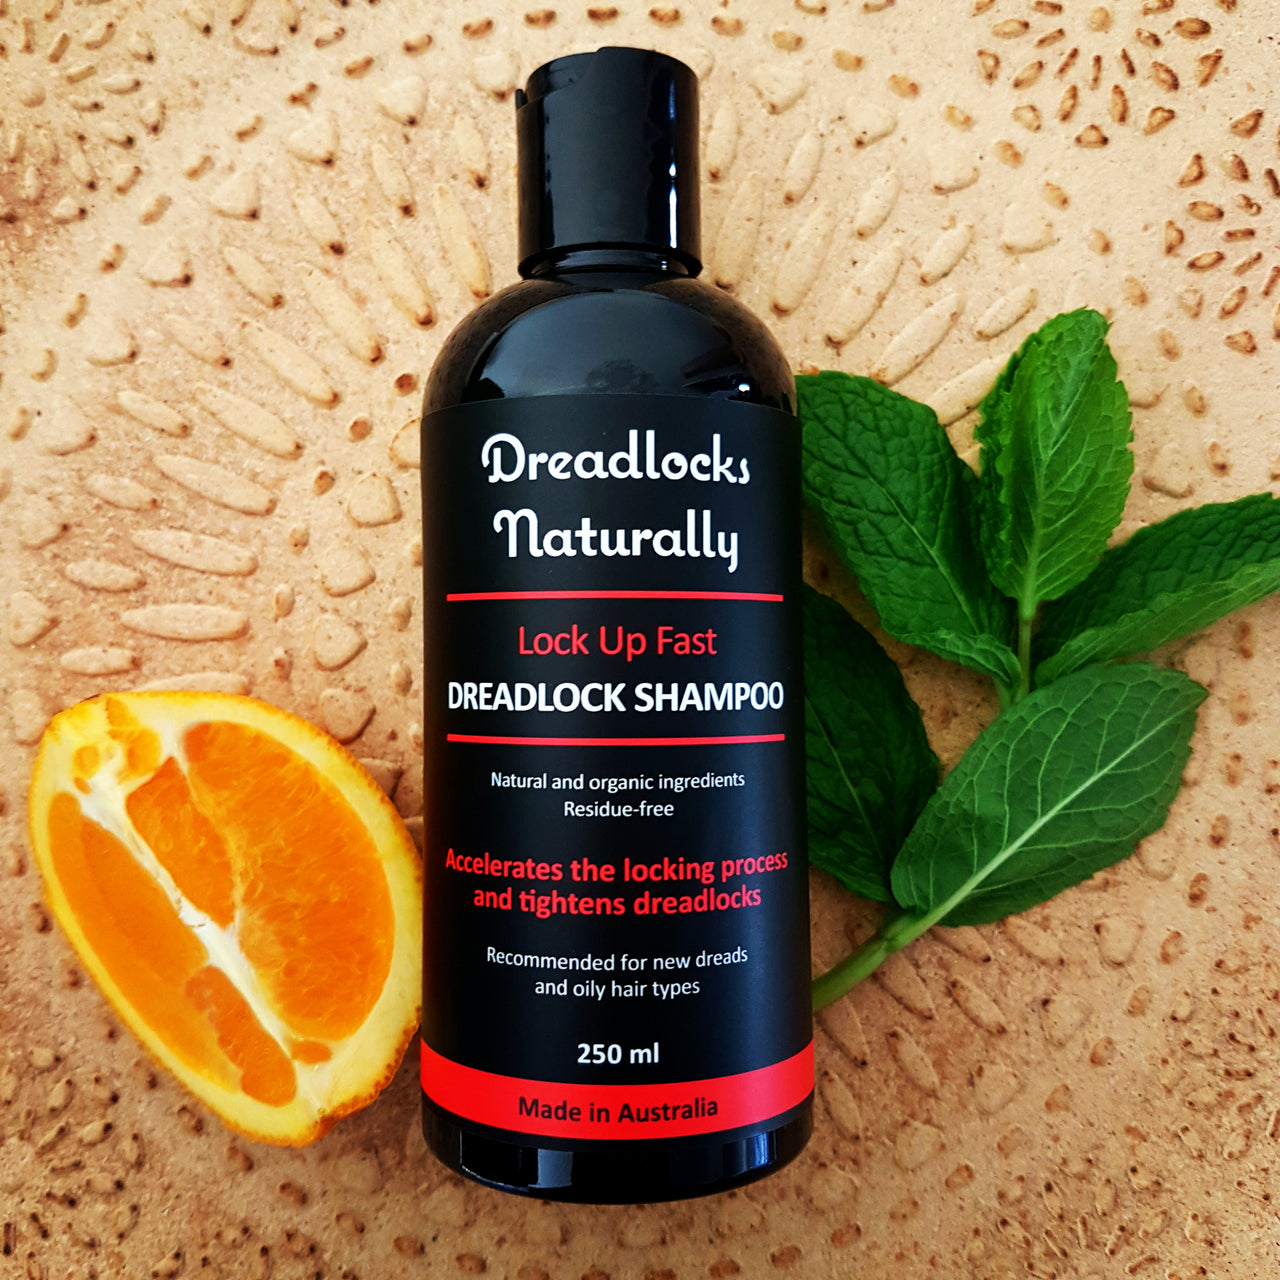 Lock Up Fast organic dreadlock shampoo by Dreadlocks Naturally